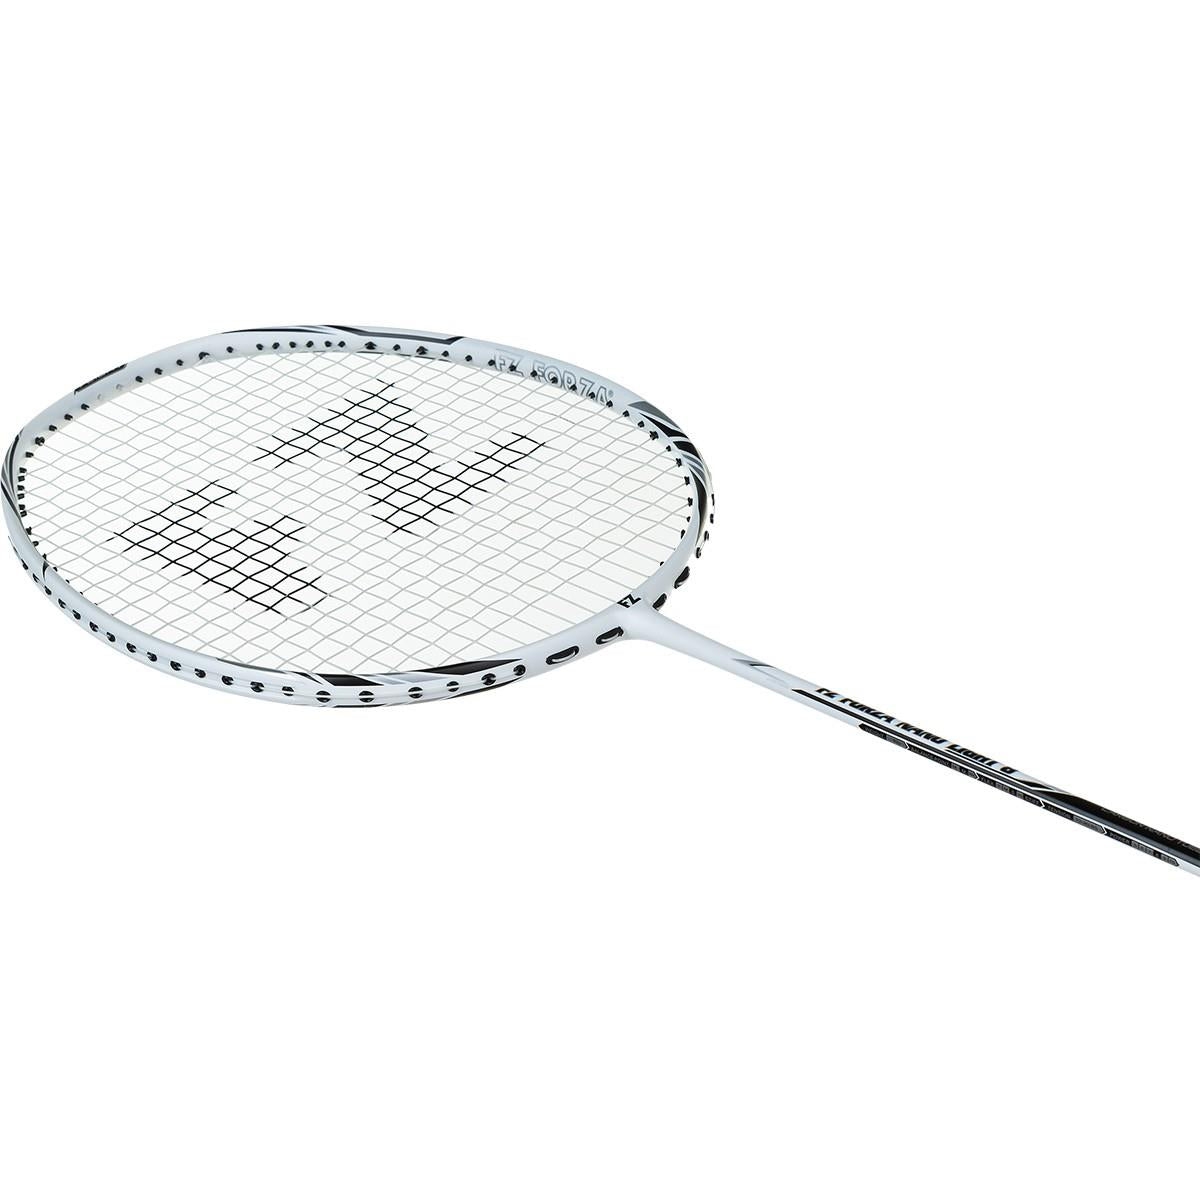 FZ Forza Nano Light 8 Badminton Racket - White